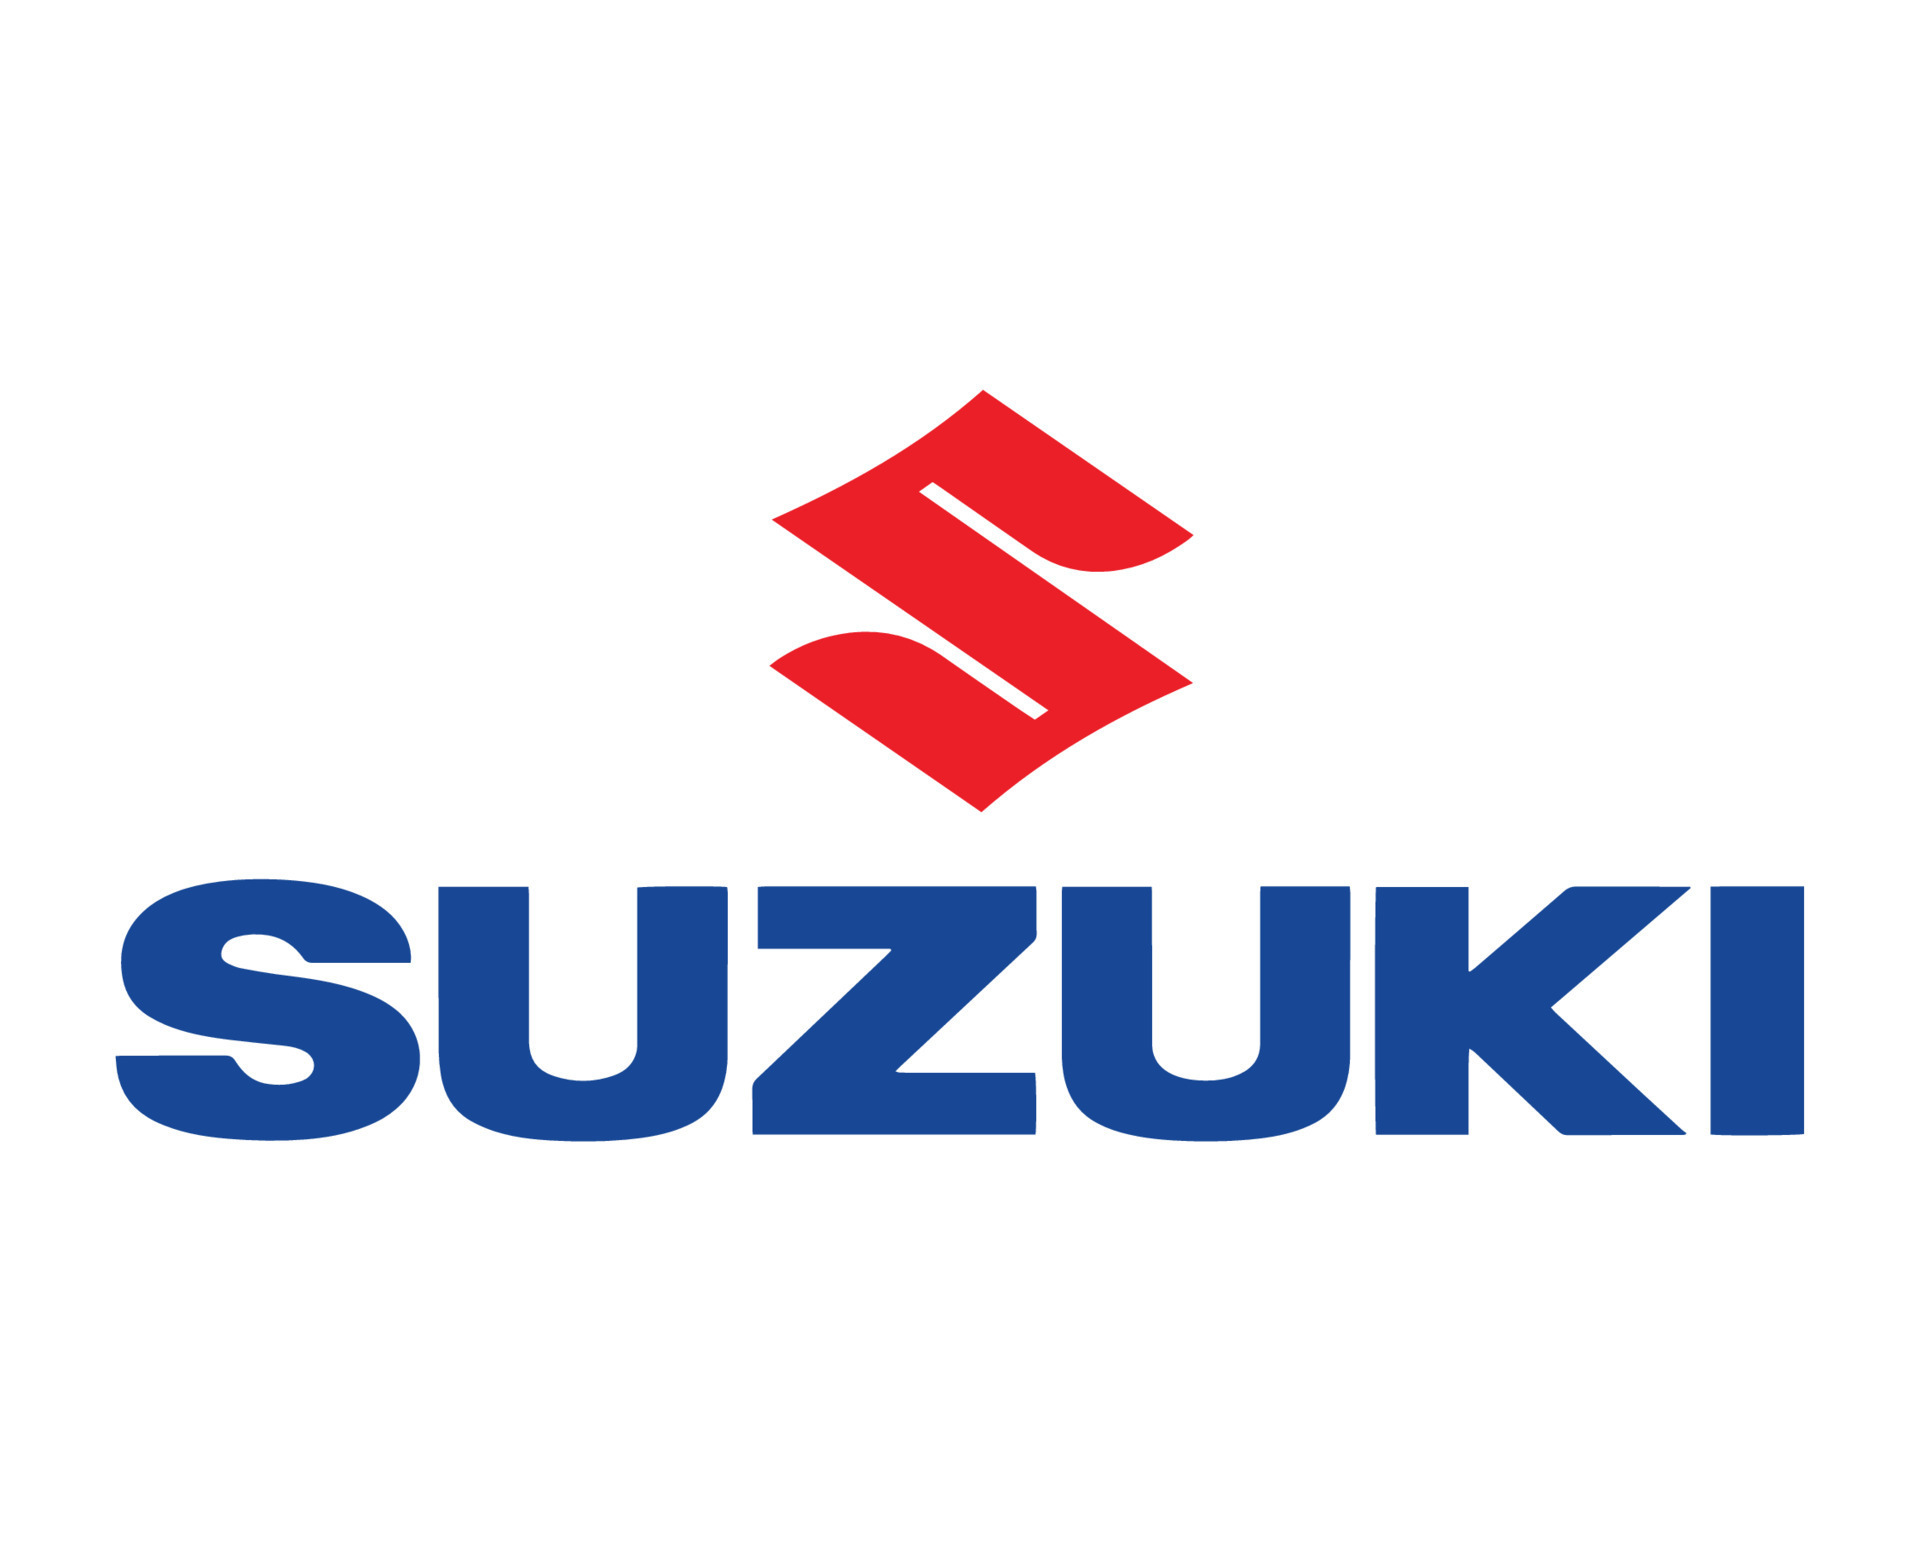 https://static.vecteezy.com/system/resources/previews/020/927/712/original/suzuki-logo-brand-car-symbol-red-with-name-blue-design-japan-automobile-illustration-free-vector.jpg